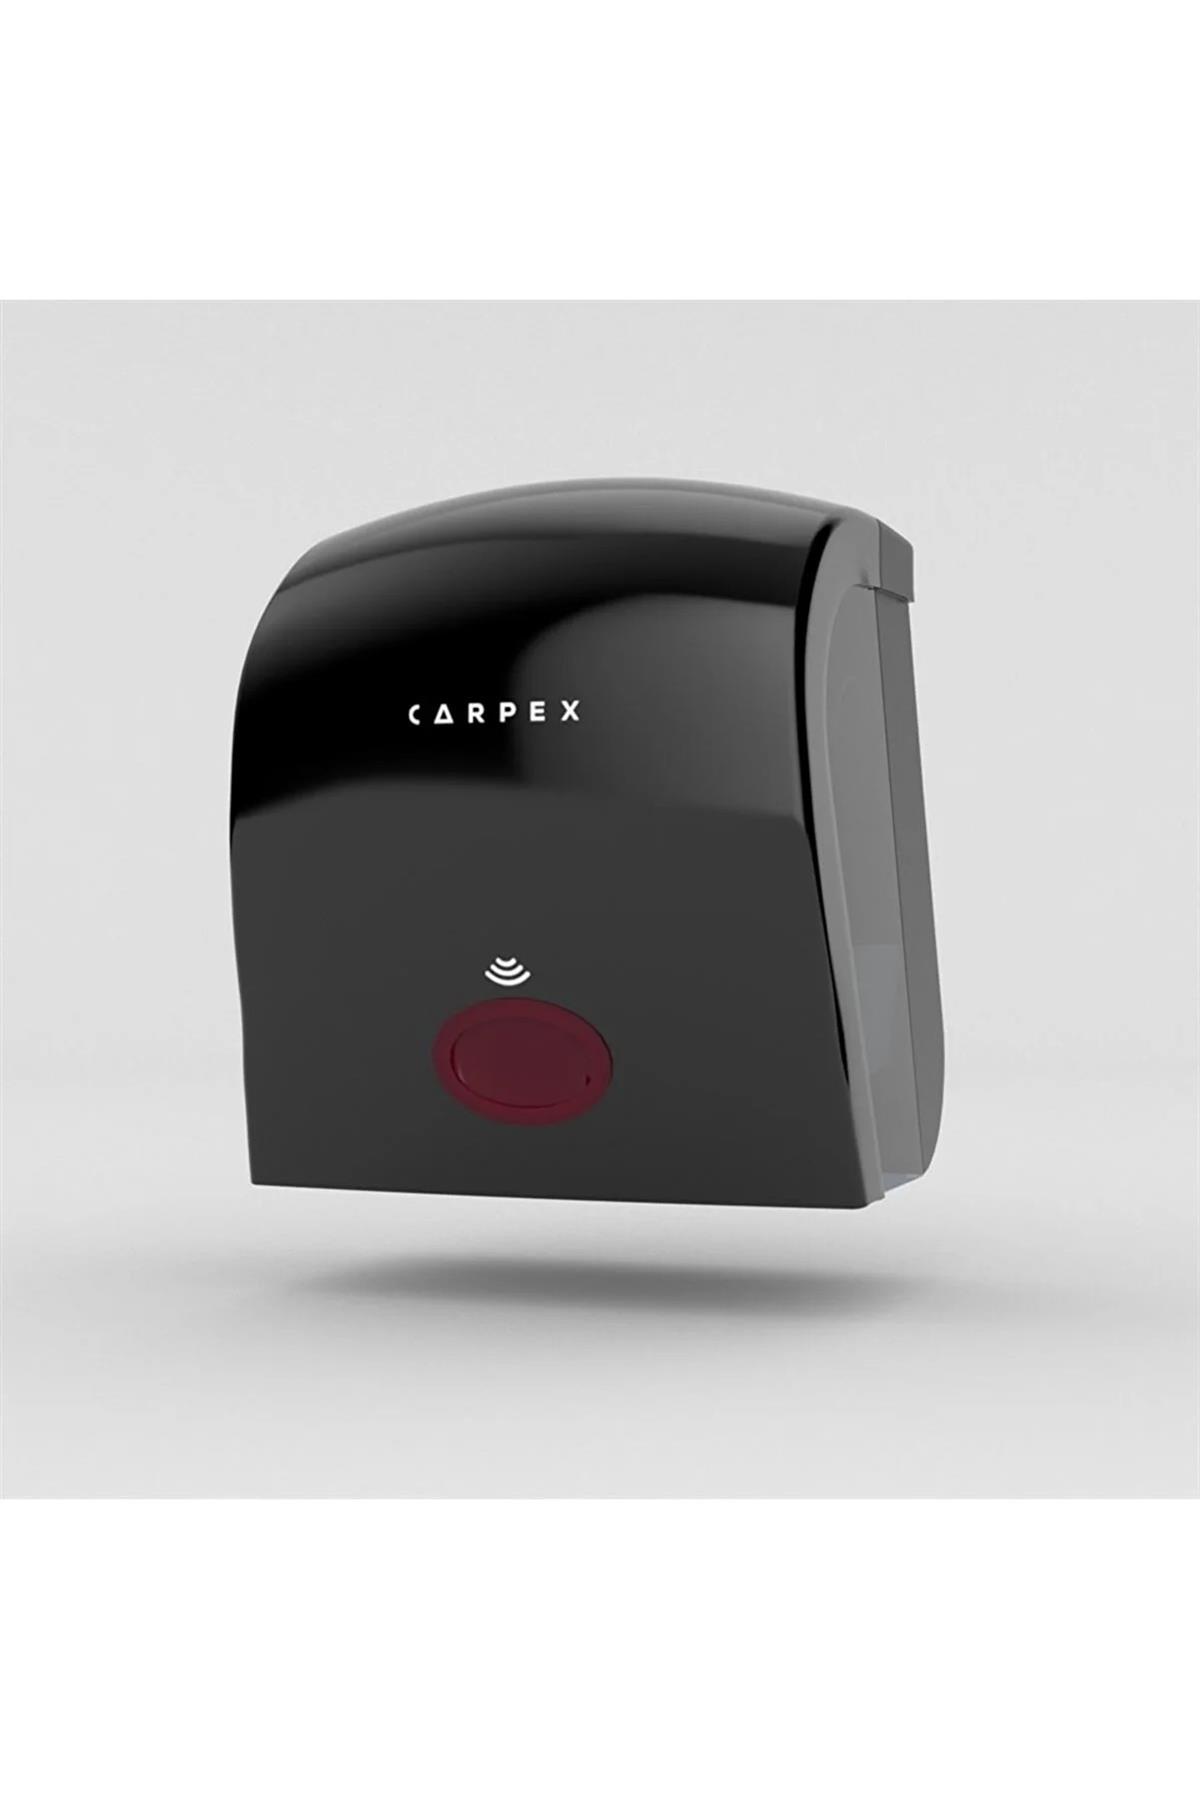 Carpex Siyah Renk Nature Sensörlü Fotoselli Butonlu Otomatik Elektrikli ve  Pilli Hareketli Kağıt Havlu Makinesi